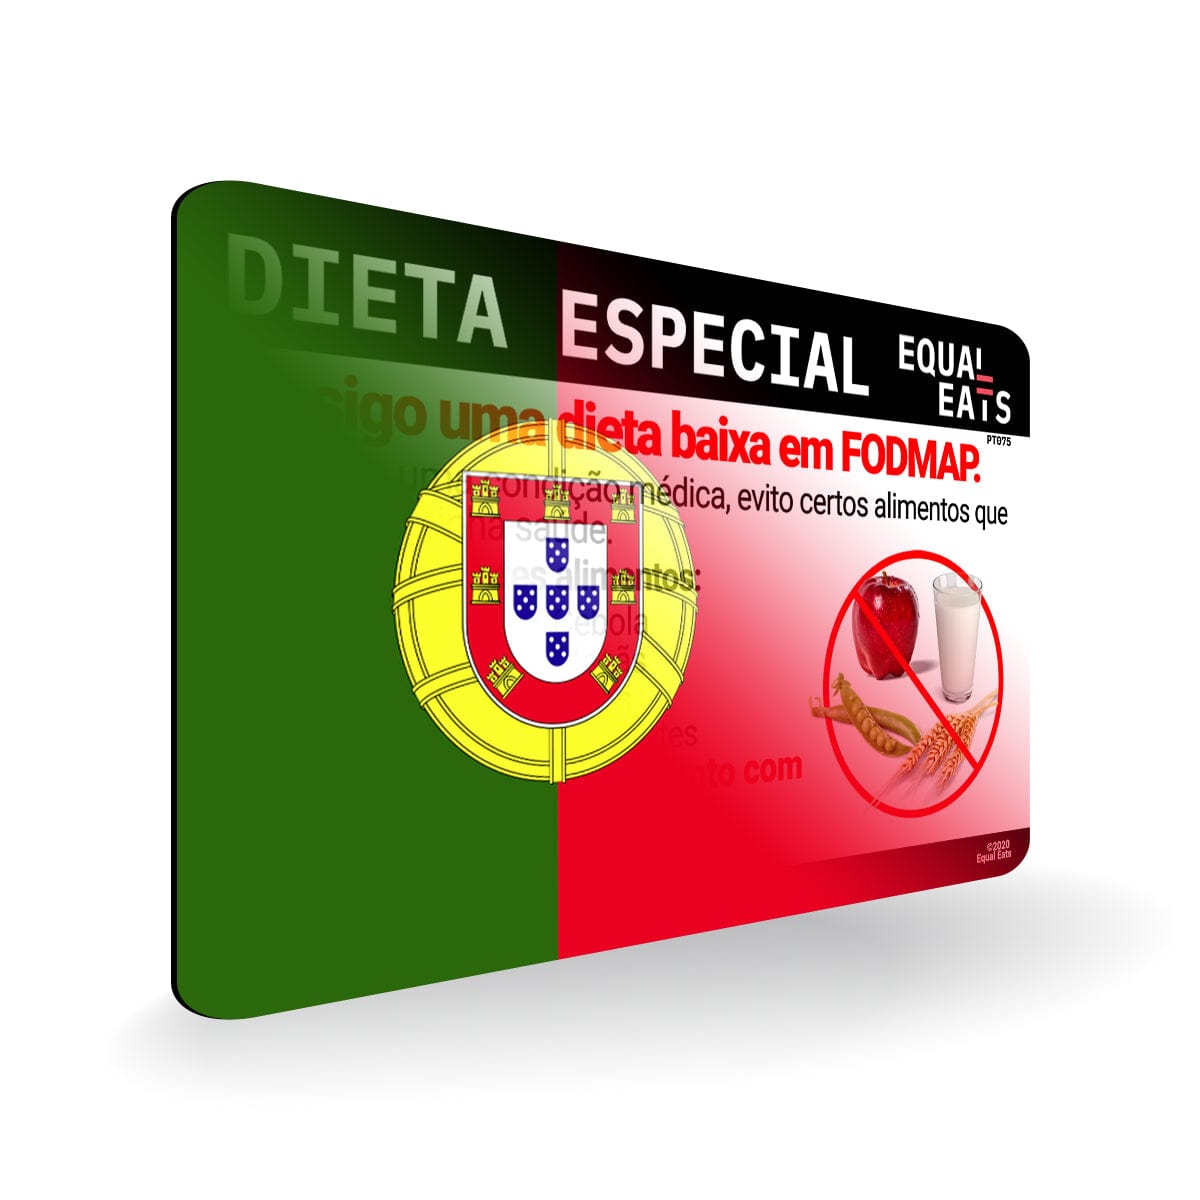 Low FODMAP Diet in Portuguese. Low FODMAP Diet Card for Portugal